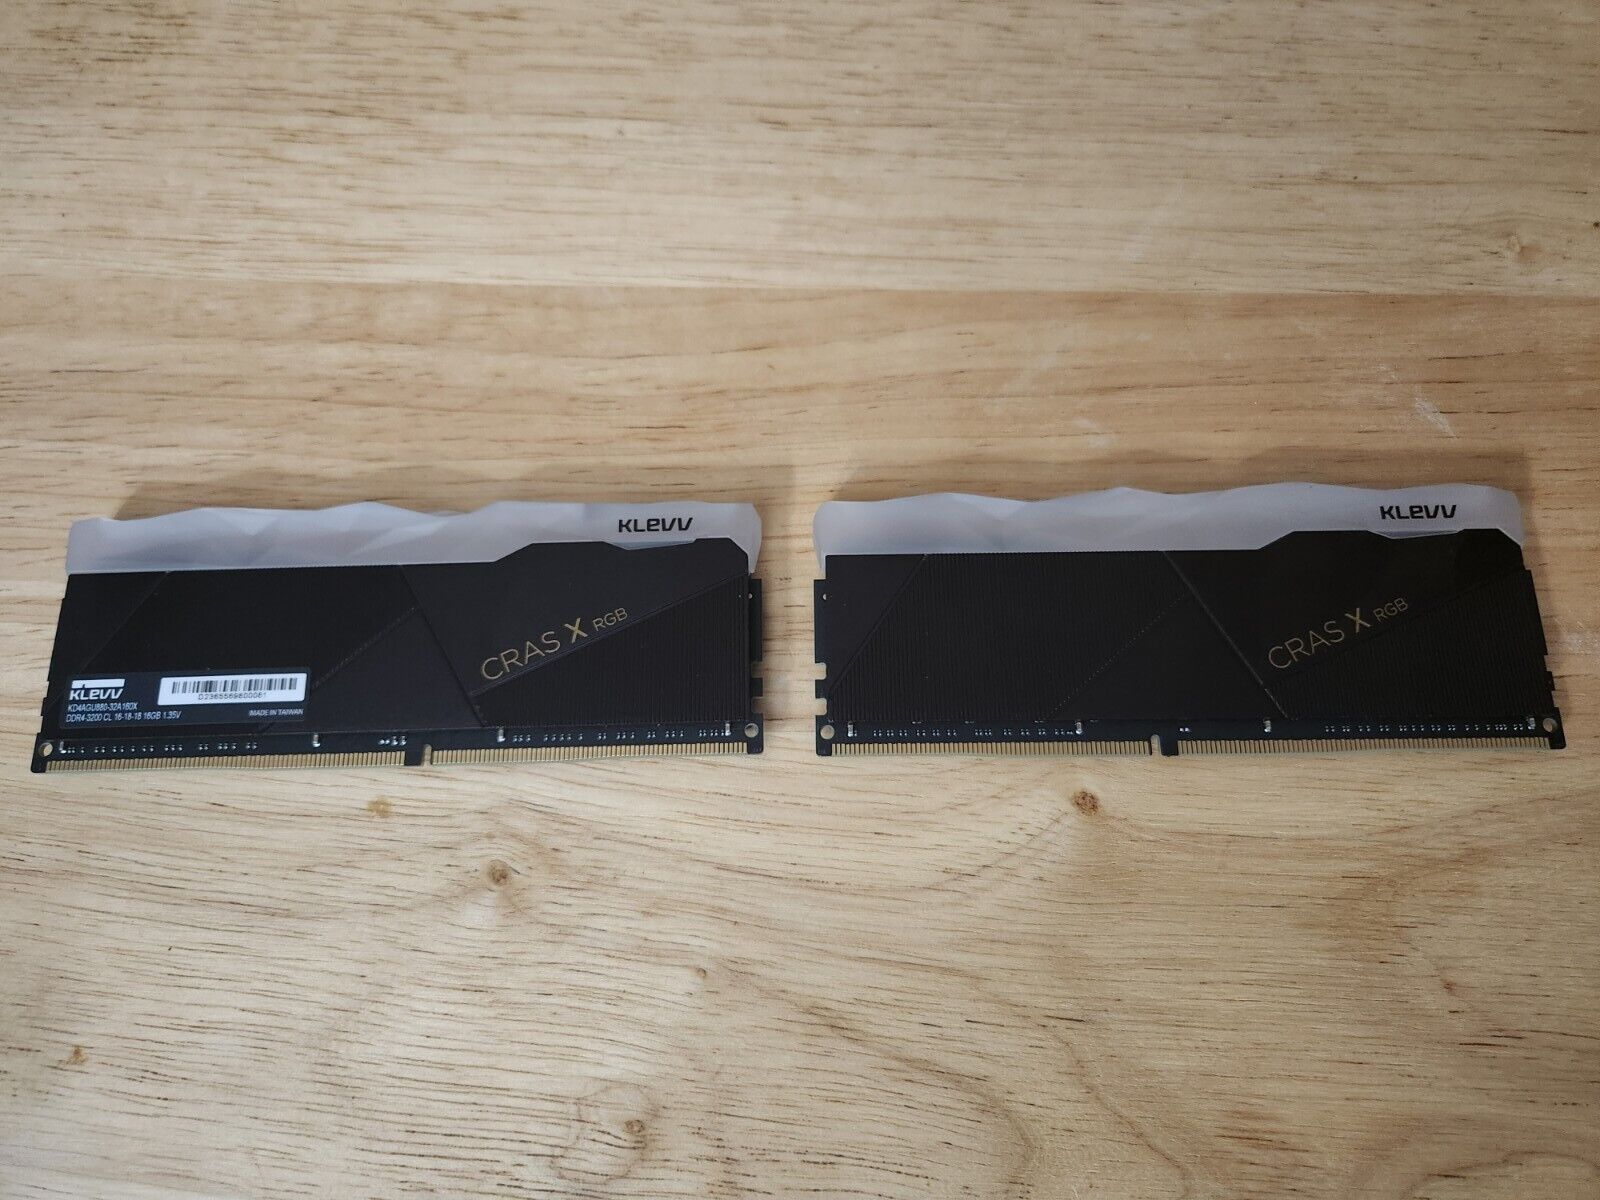 Klevv 32gb (2x16gb) DDR4 Ram Kit